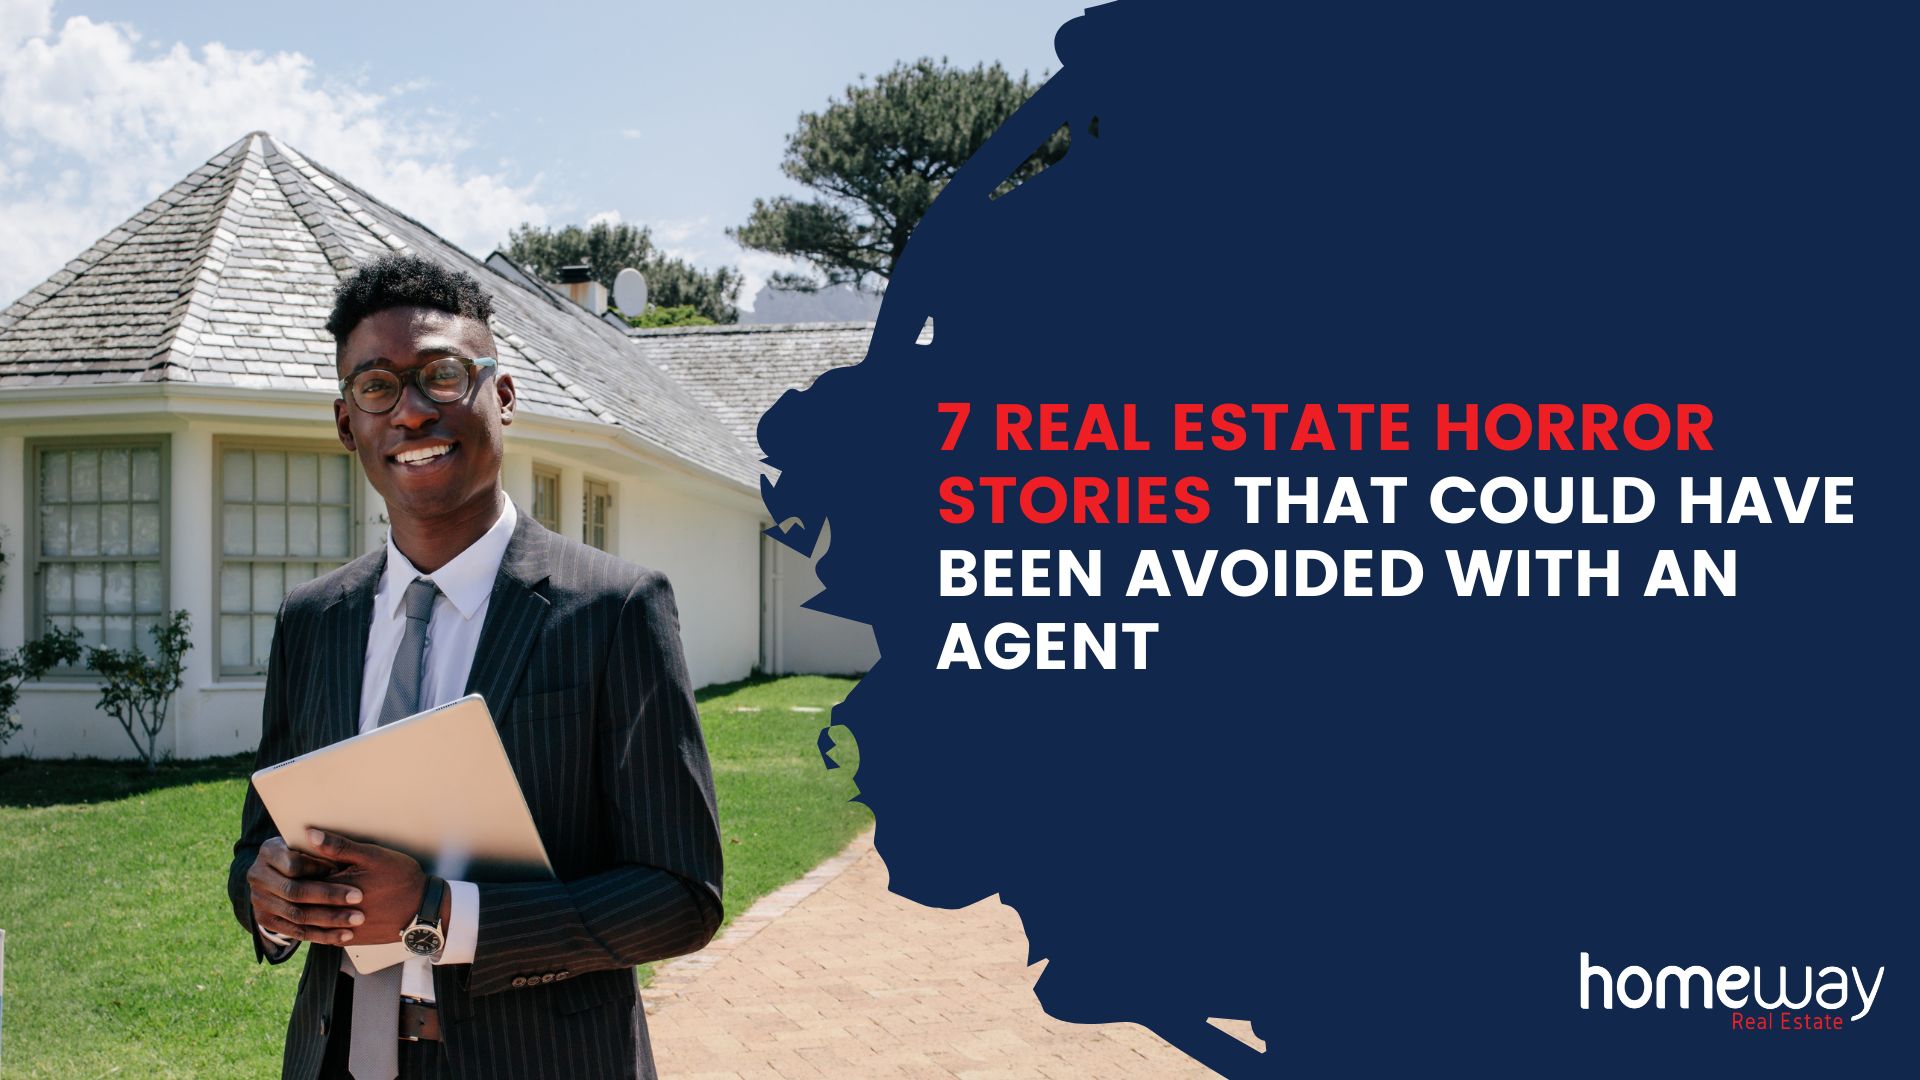 Homes for Sale, Real Estate,Real Estate Agent